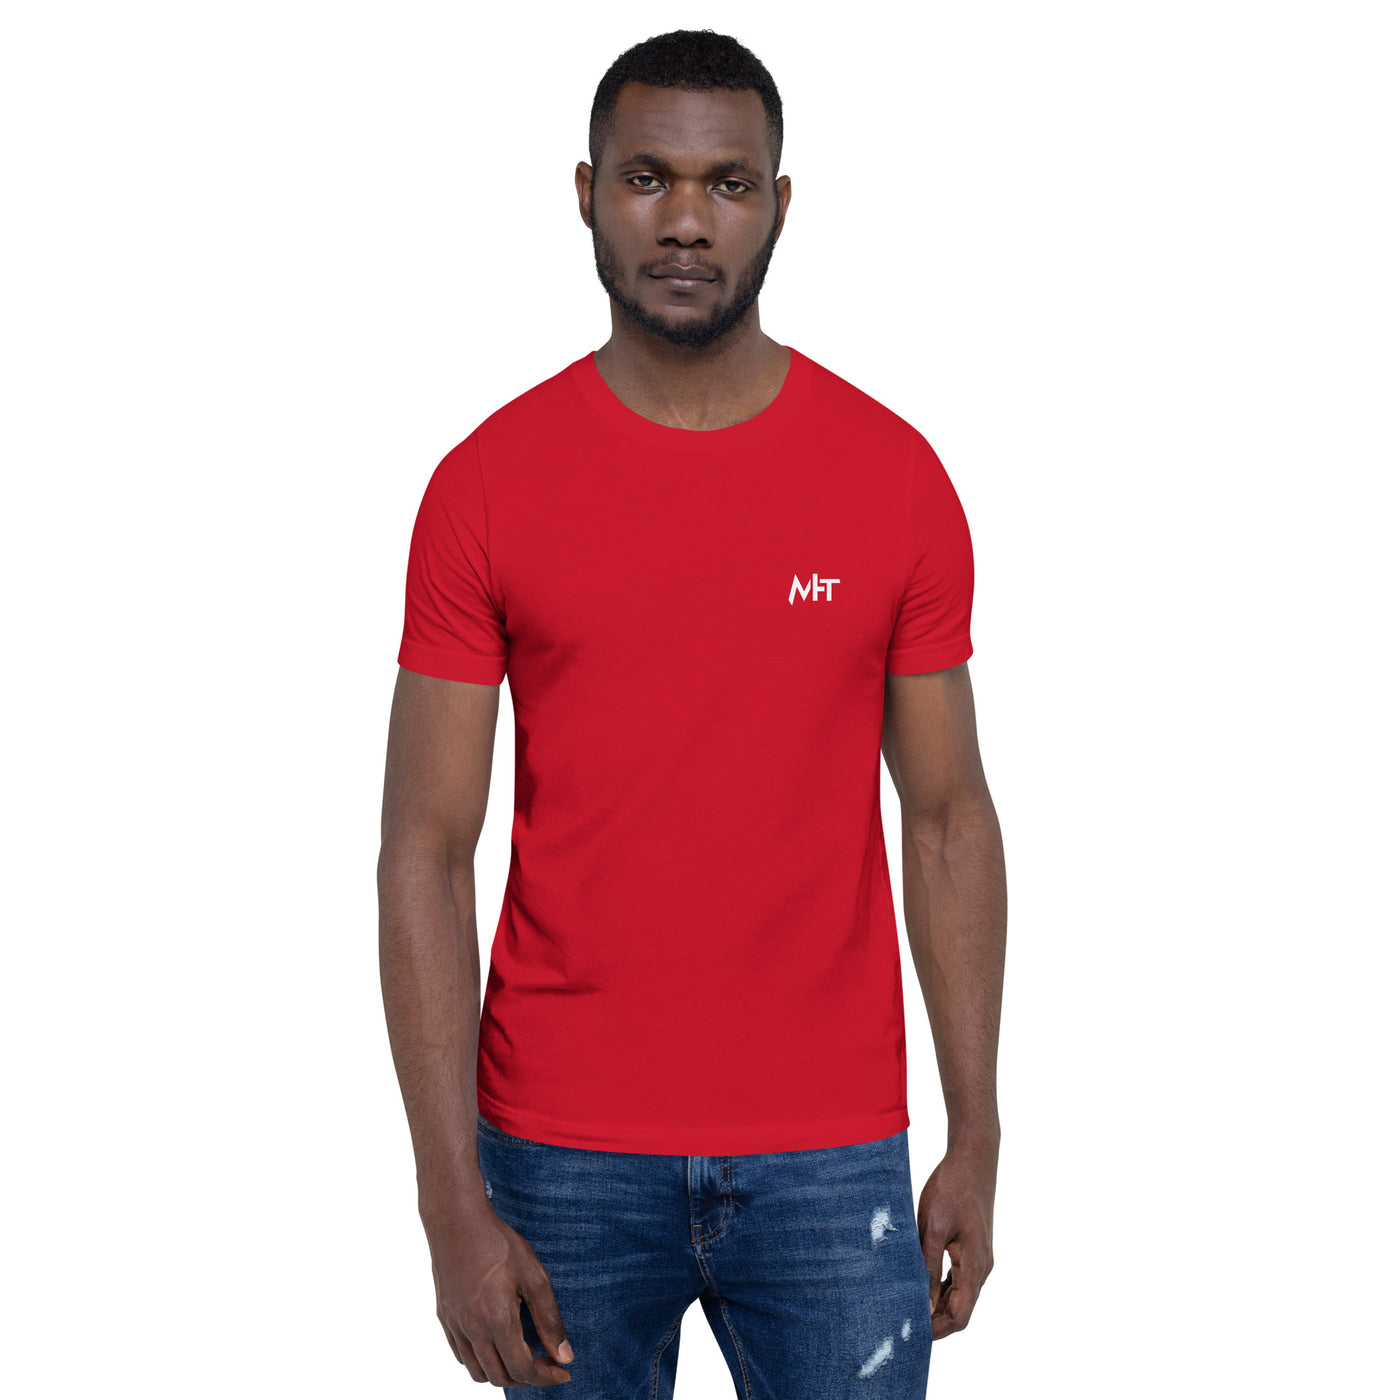 DDoS - Unisex t-shirt (back print)